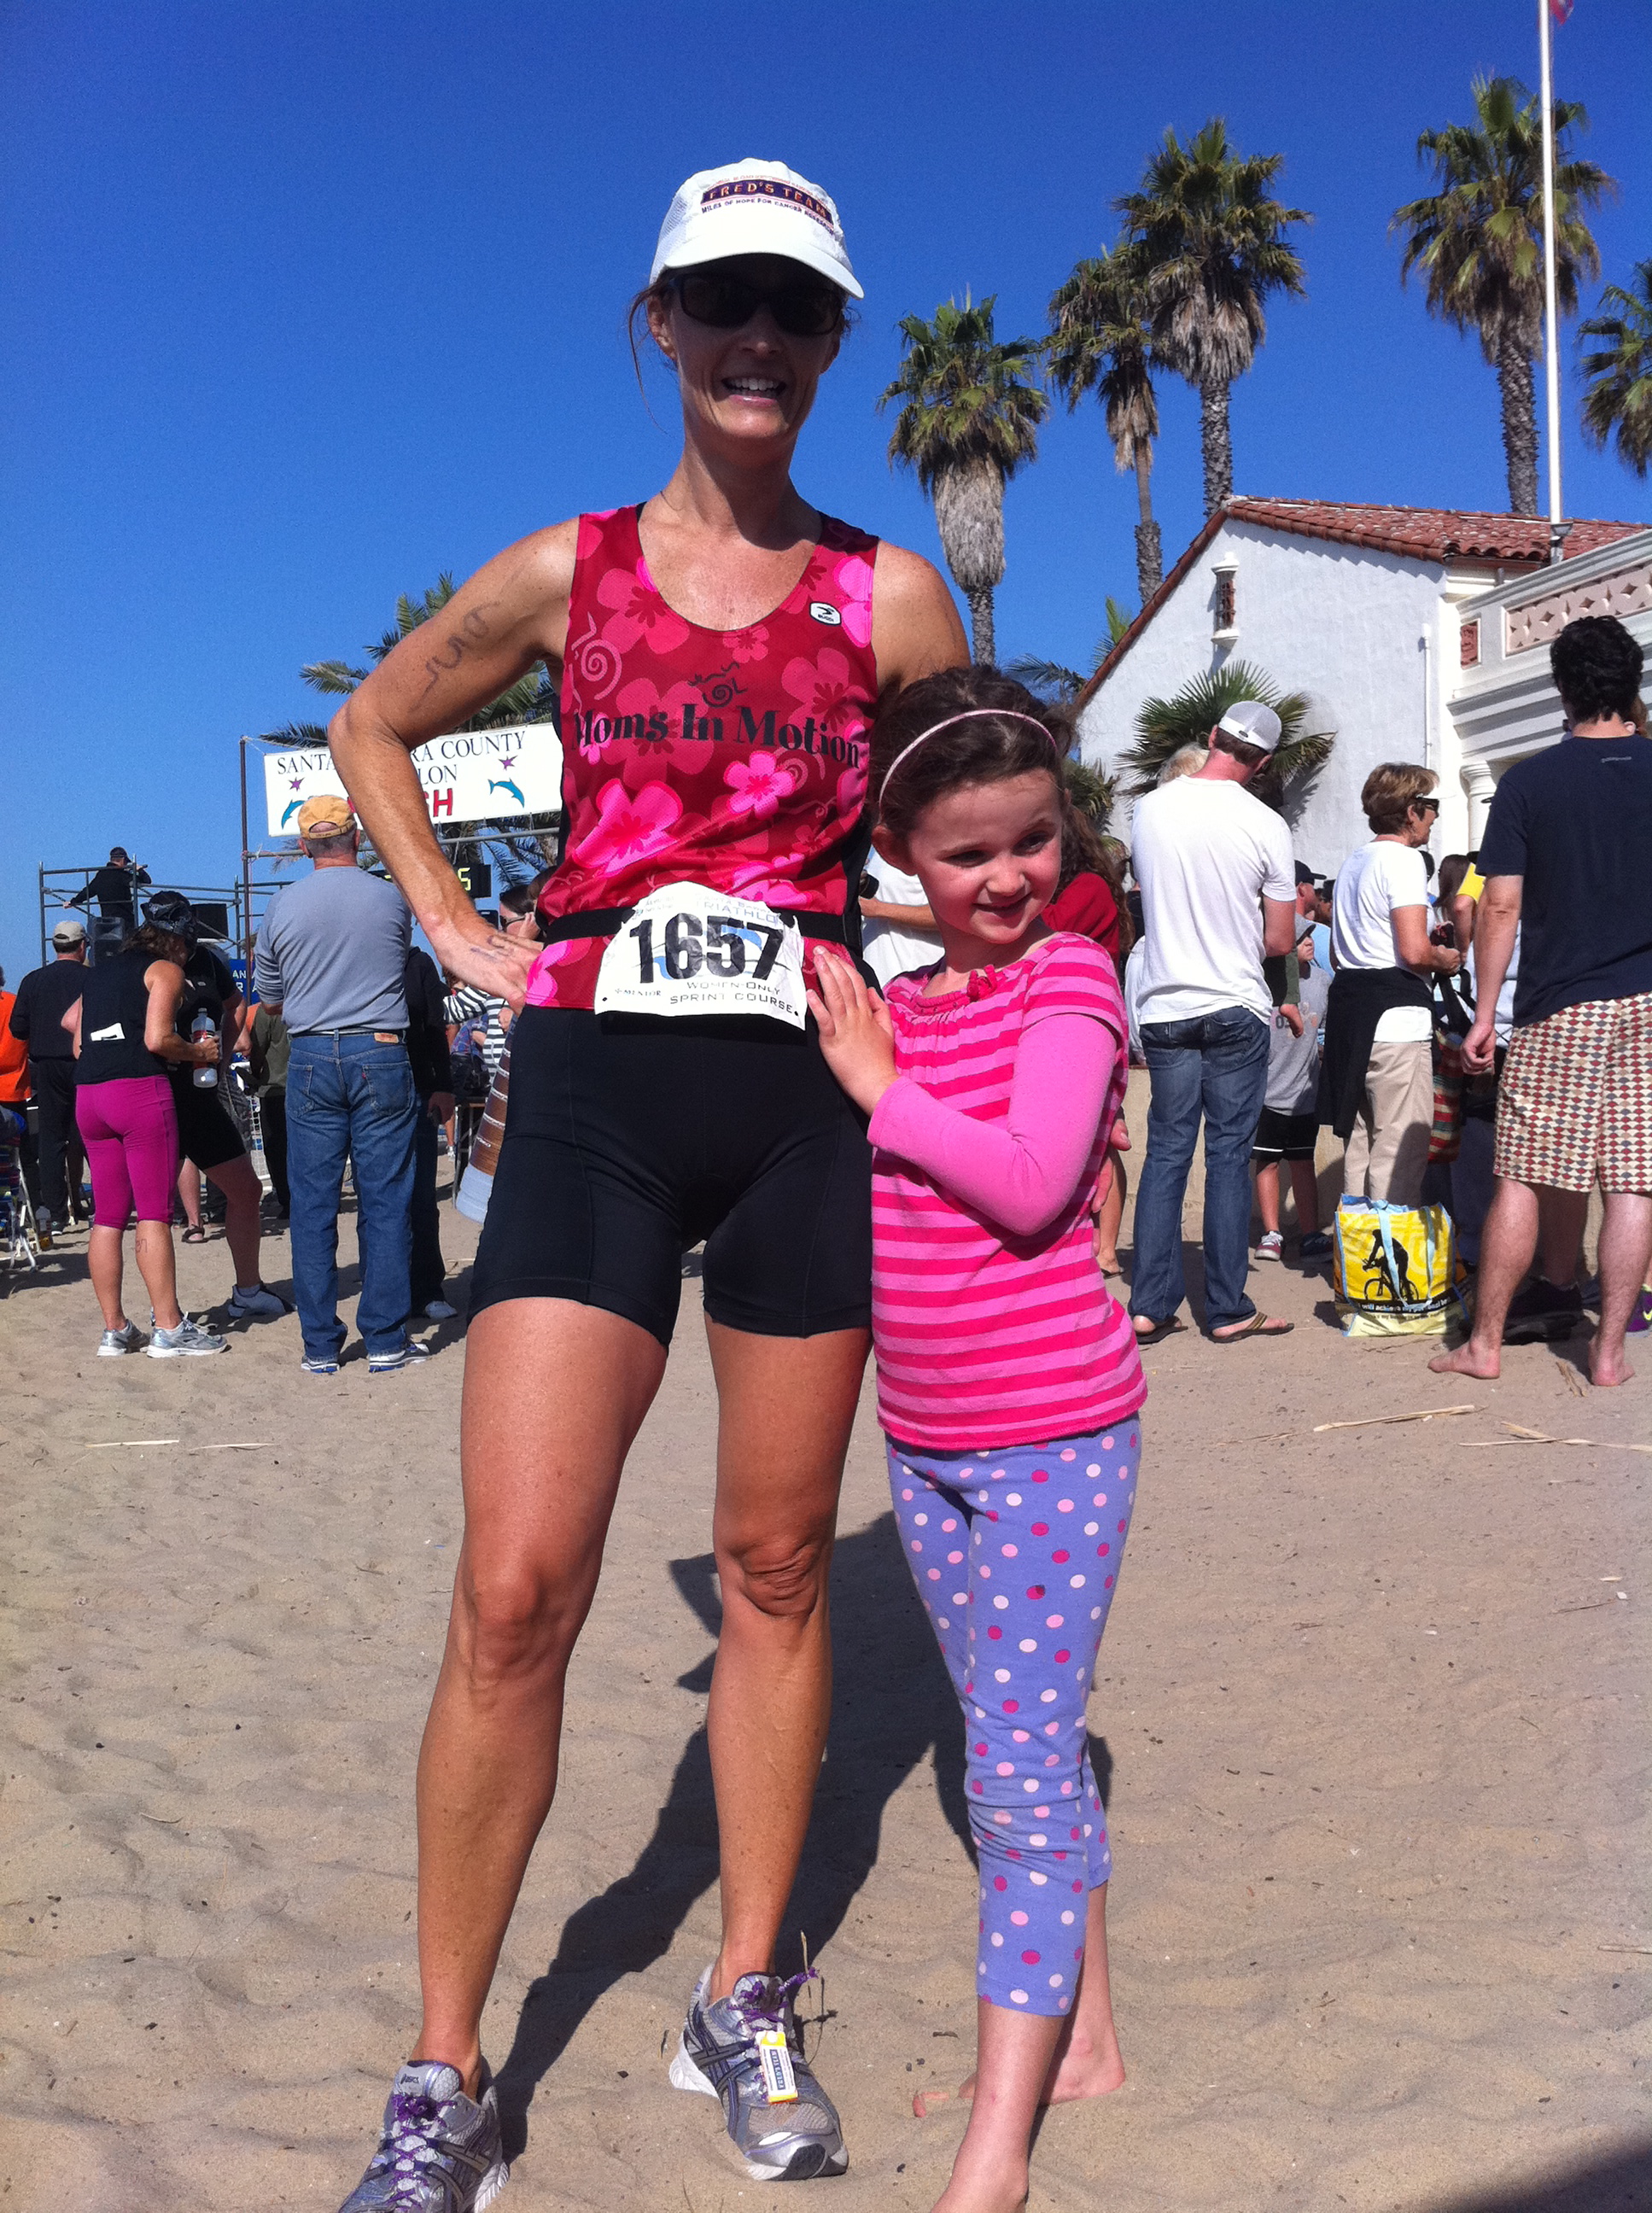 Becky Green Aaronson at the Santa Barbara Triathlon